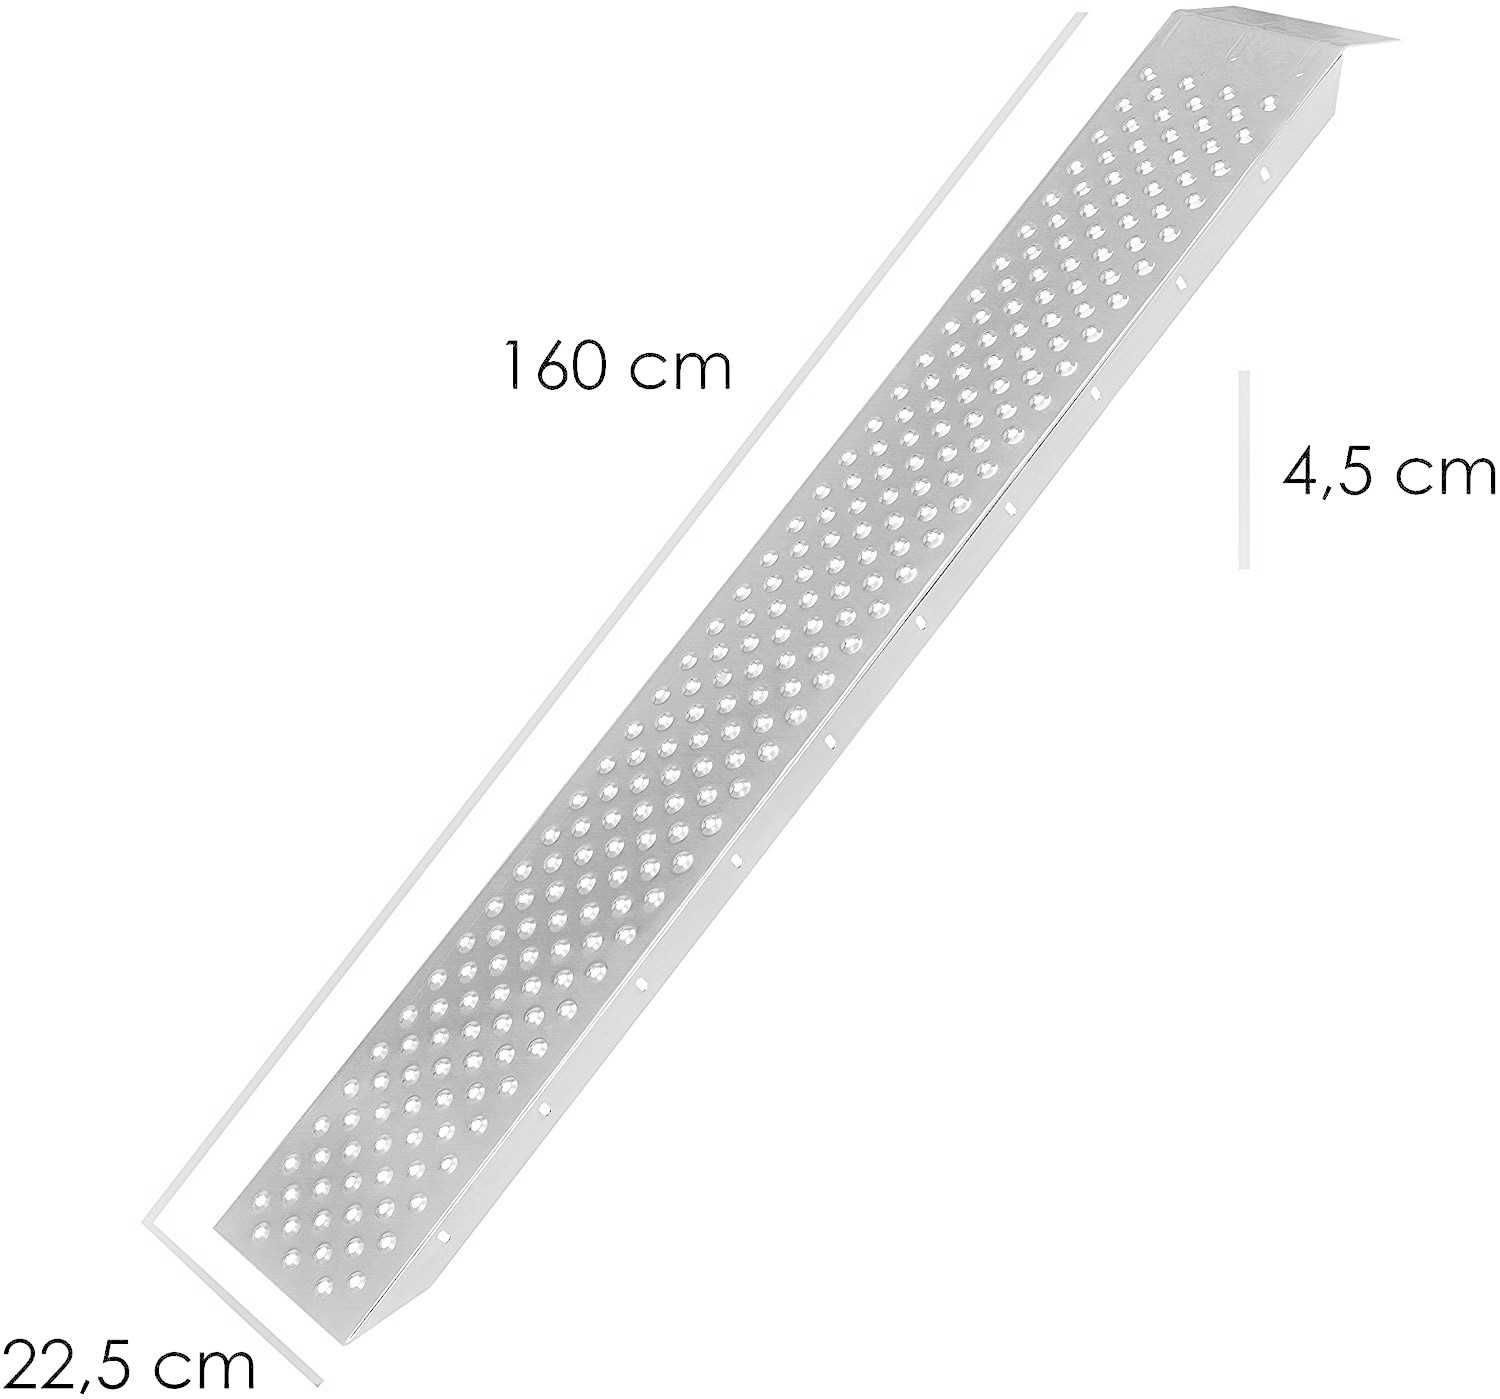 Rampa najazd podjazd stalowy prosty 1,6 m do 200 kg - 2 szt.